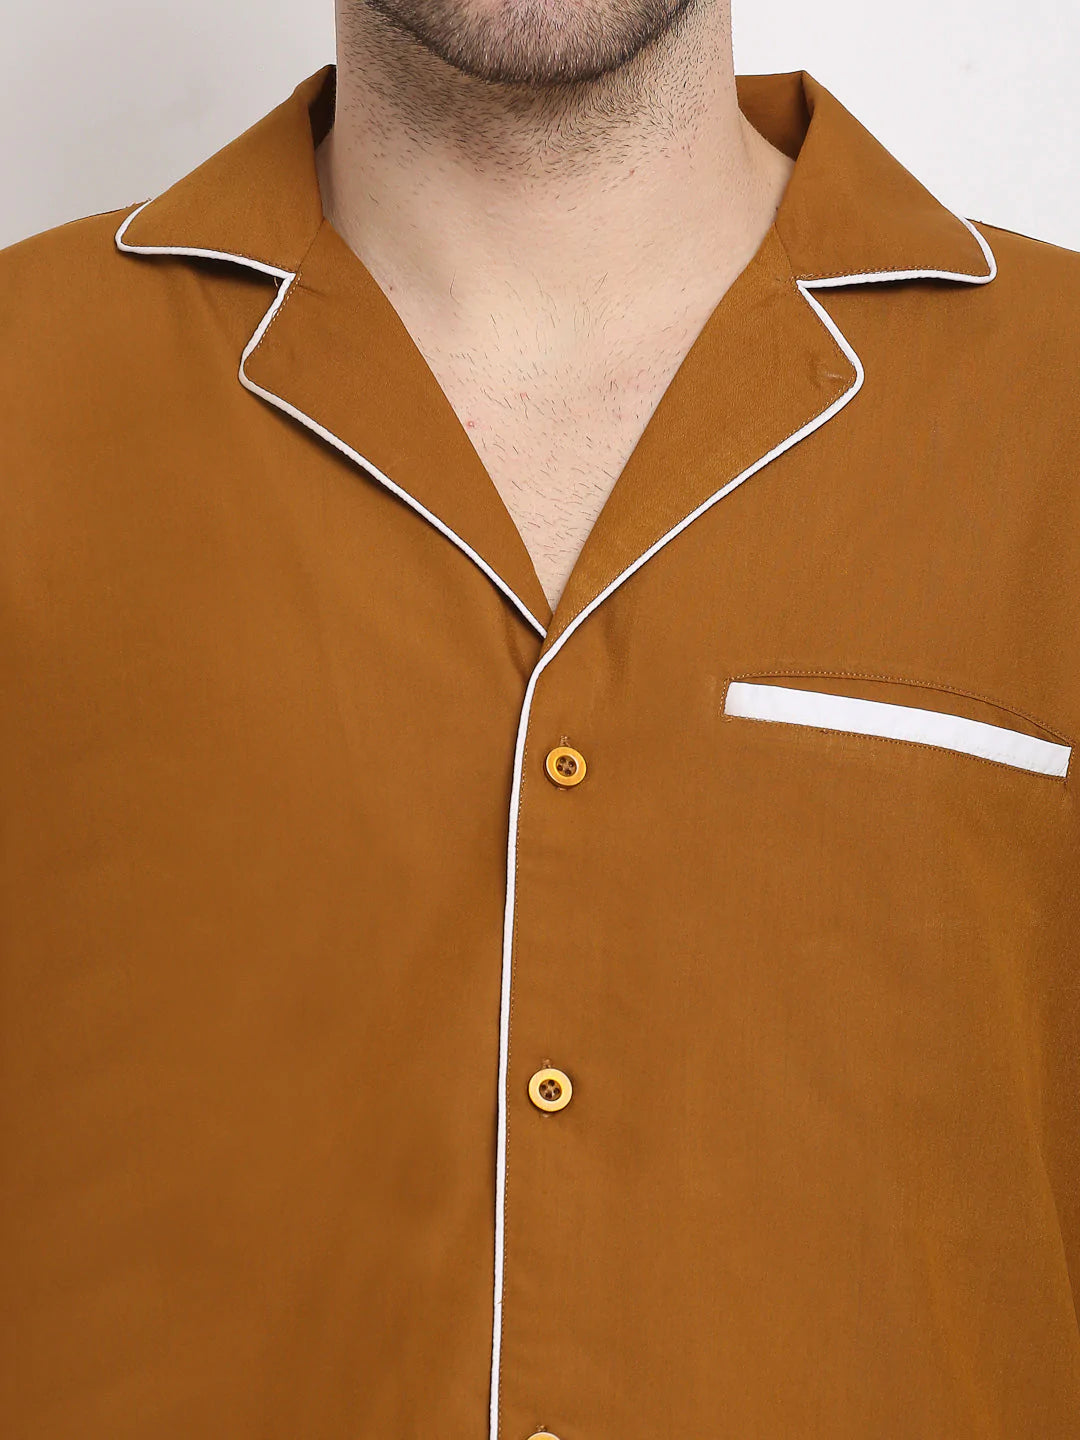 Jainish Men's Mustard Cotton Solid Night Suits ( GNS 003Mustard )